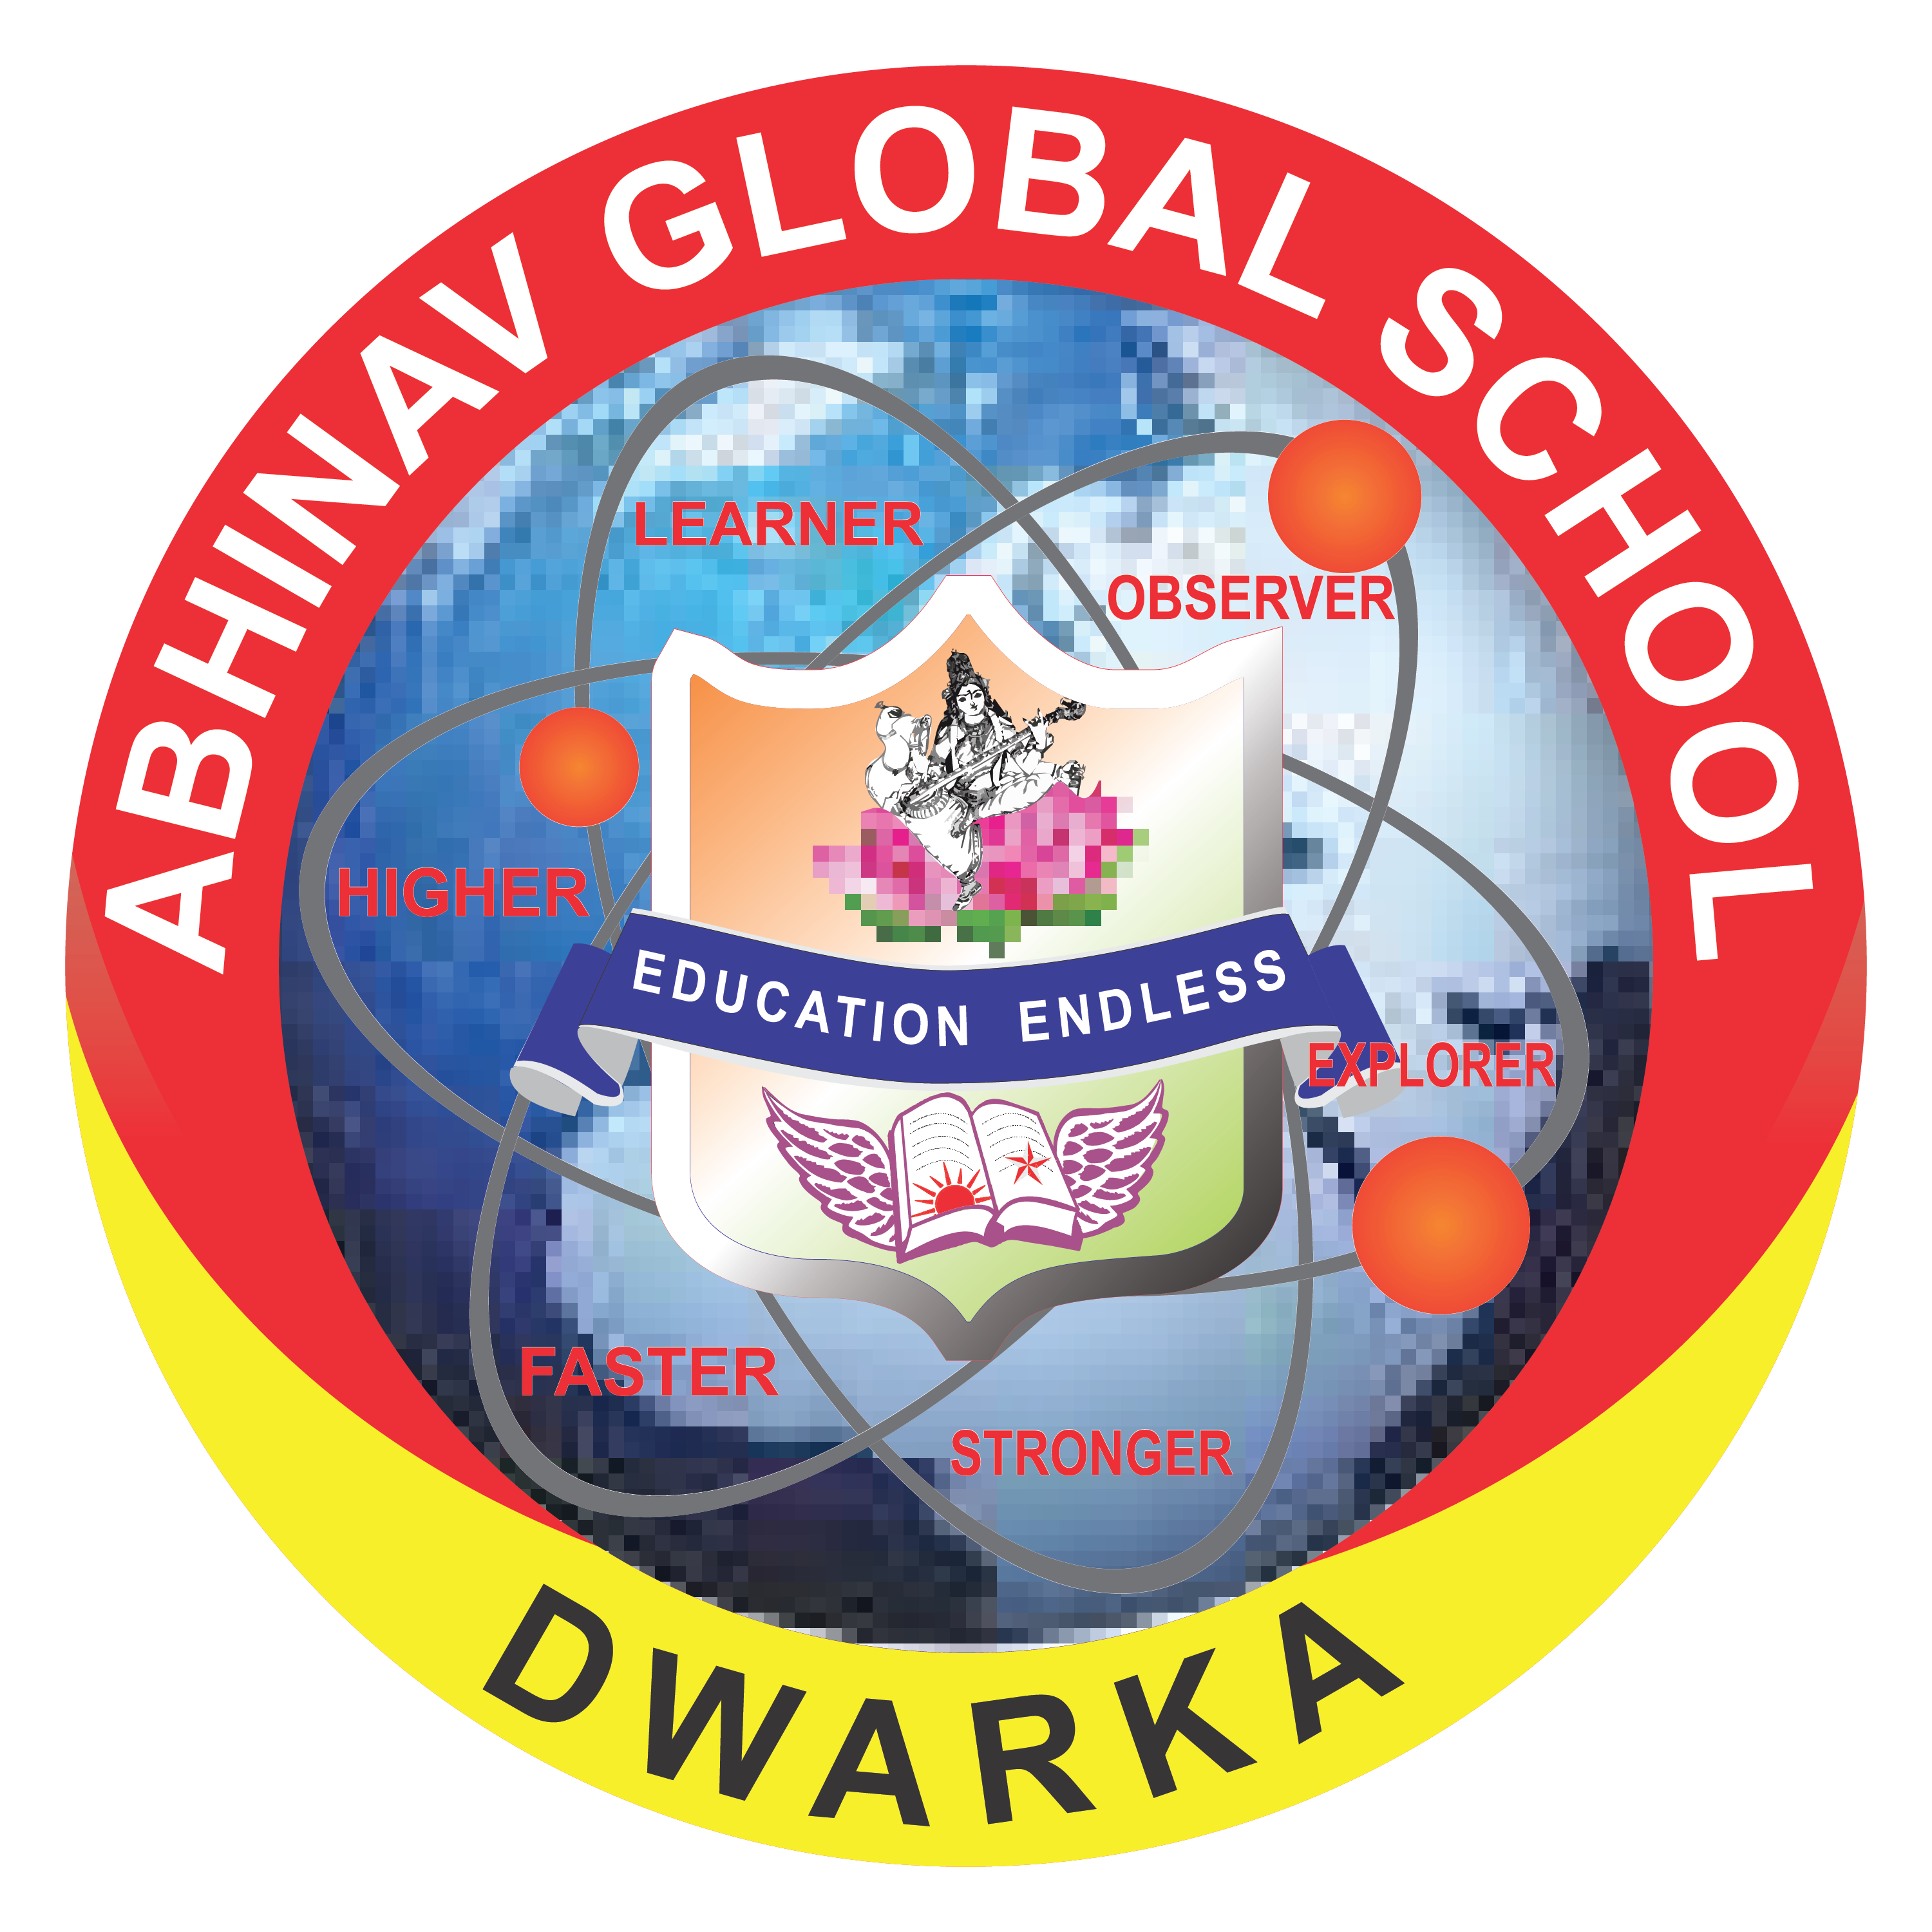 Abhinav Global School